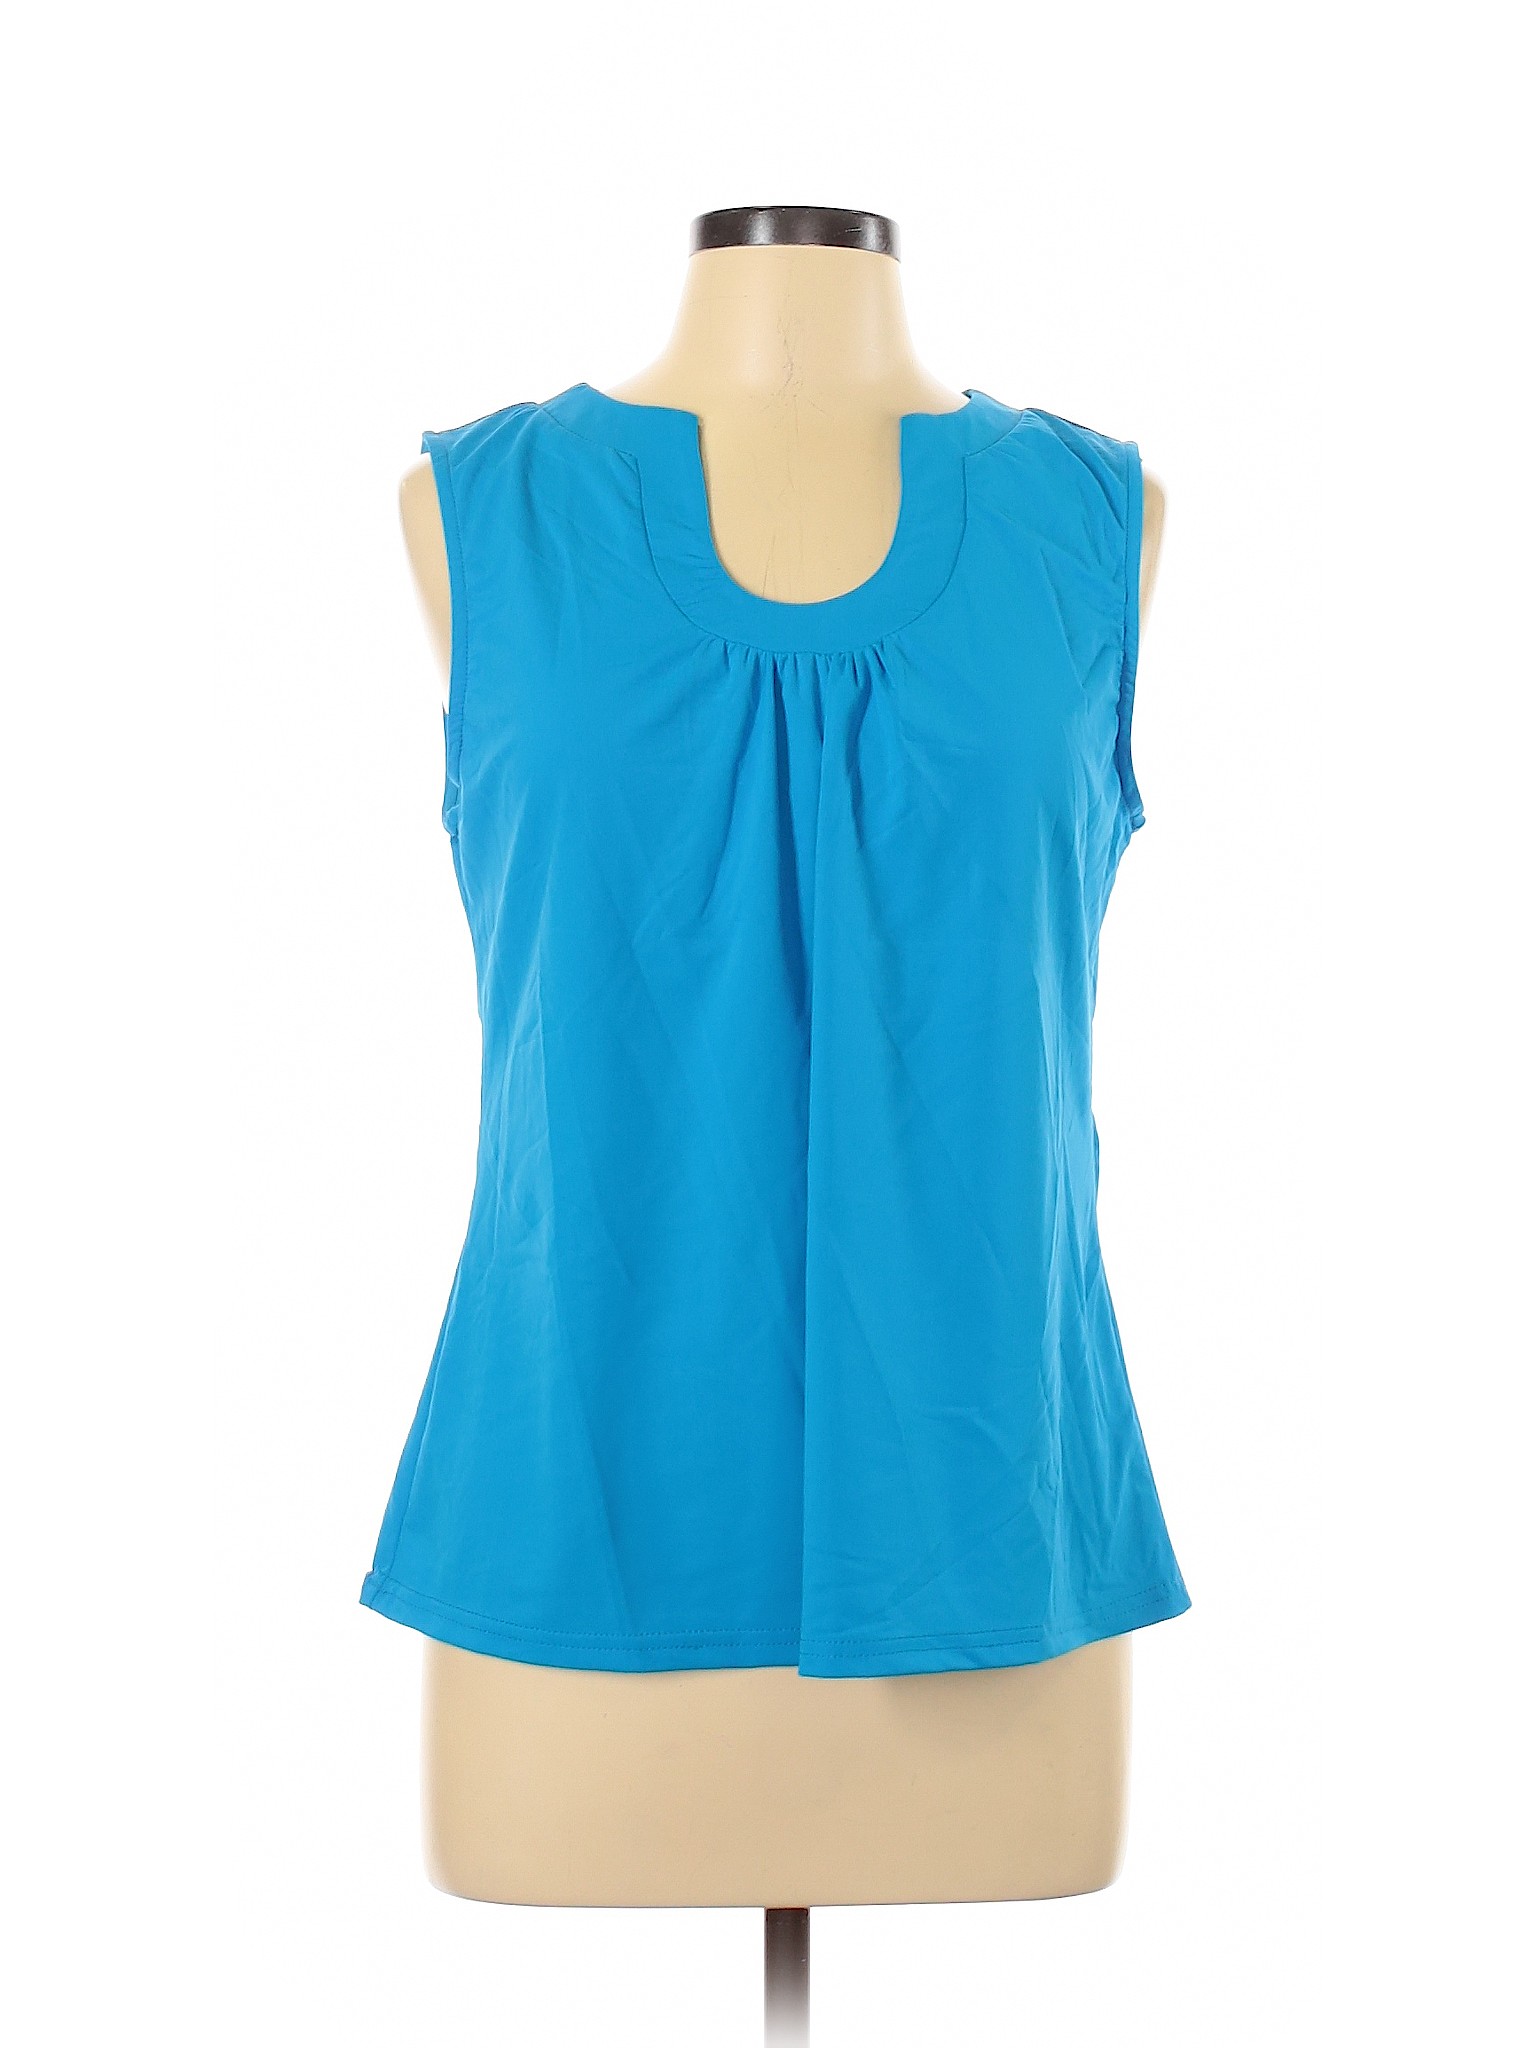 NWT Aryeh Women Blue Sleeveless Top L | eBay